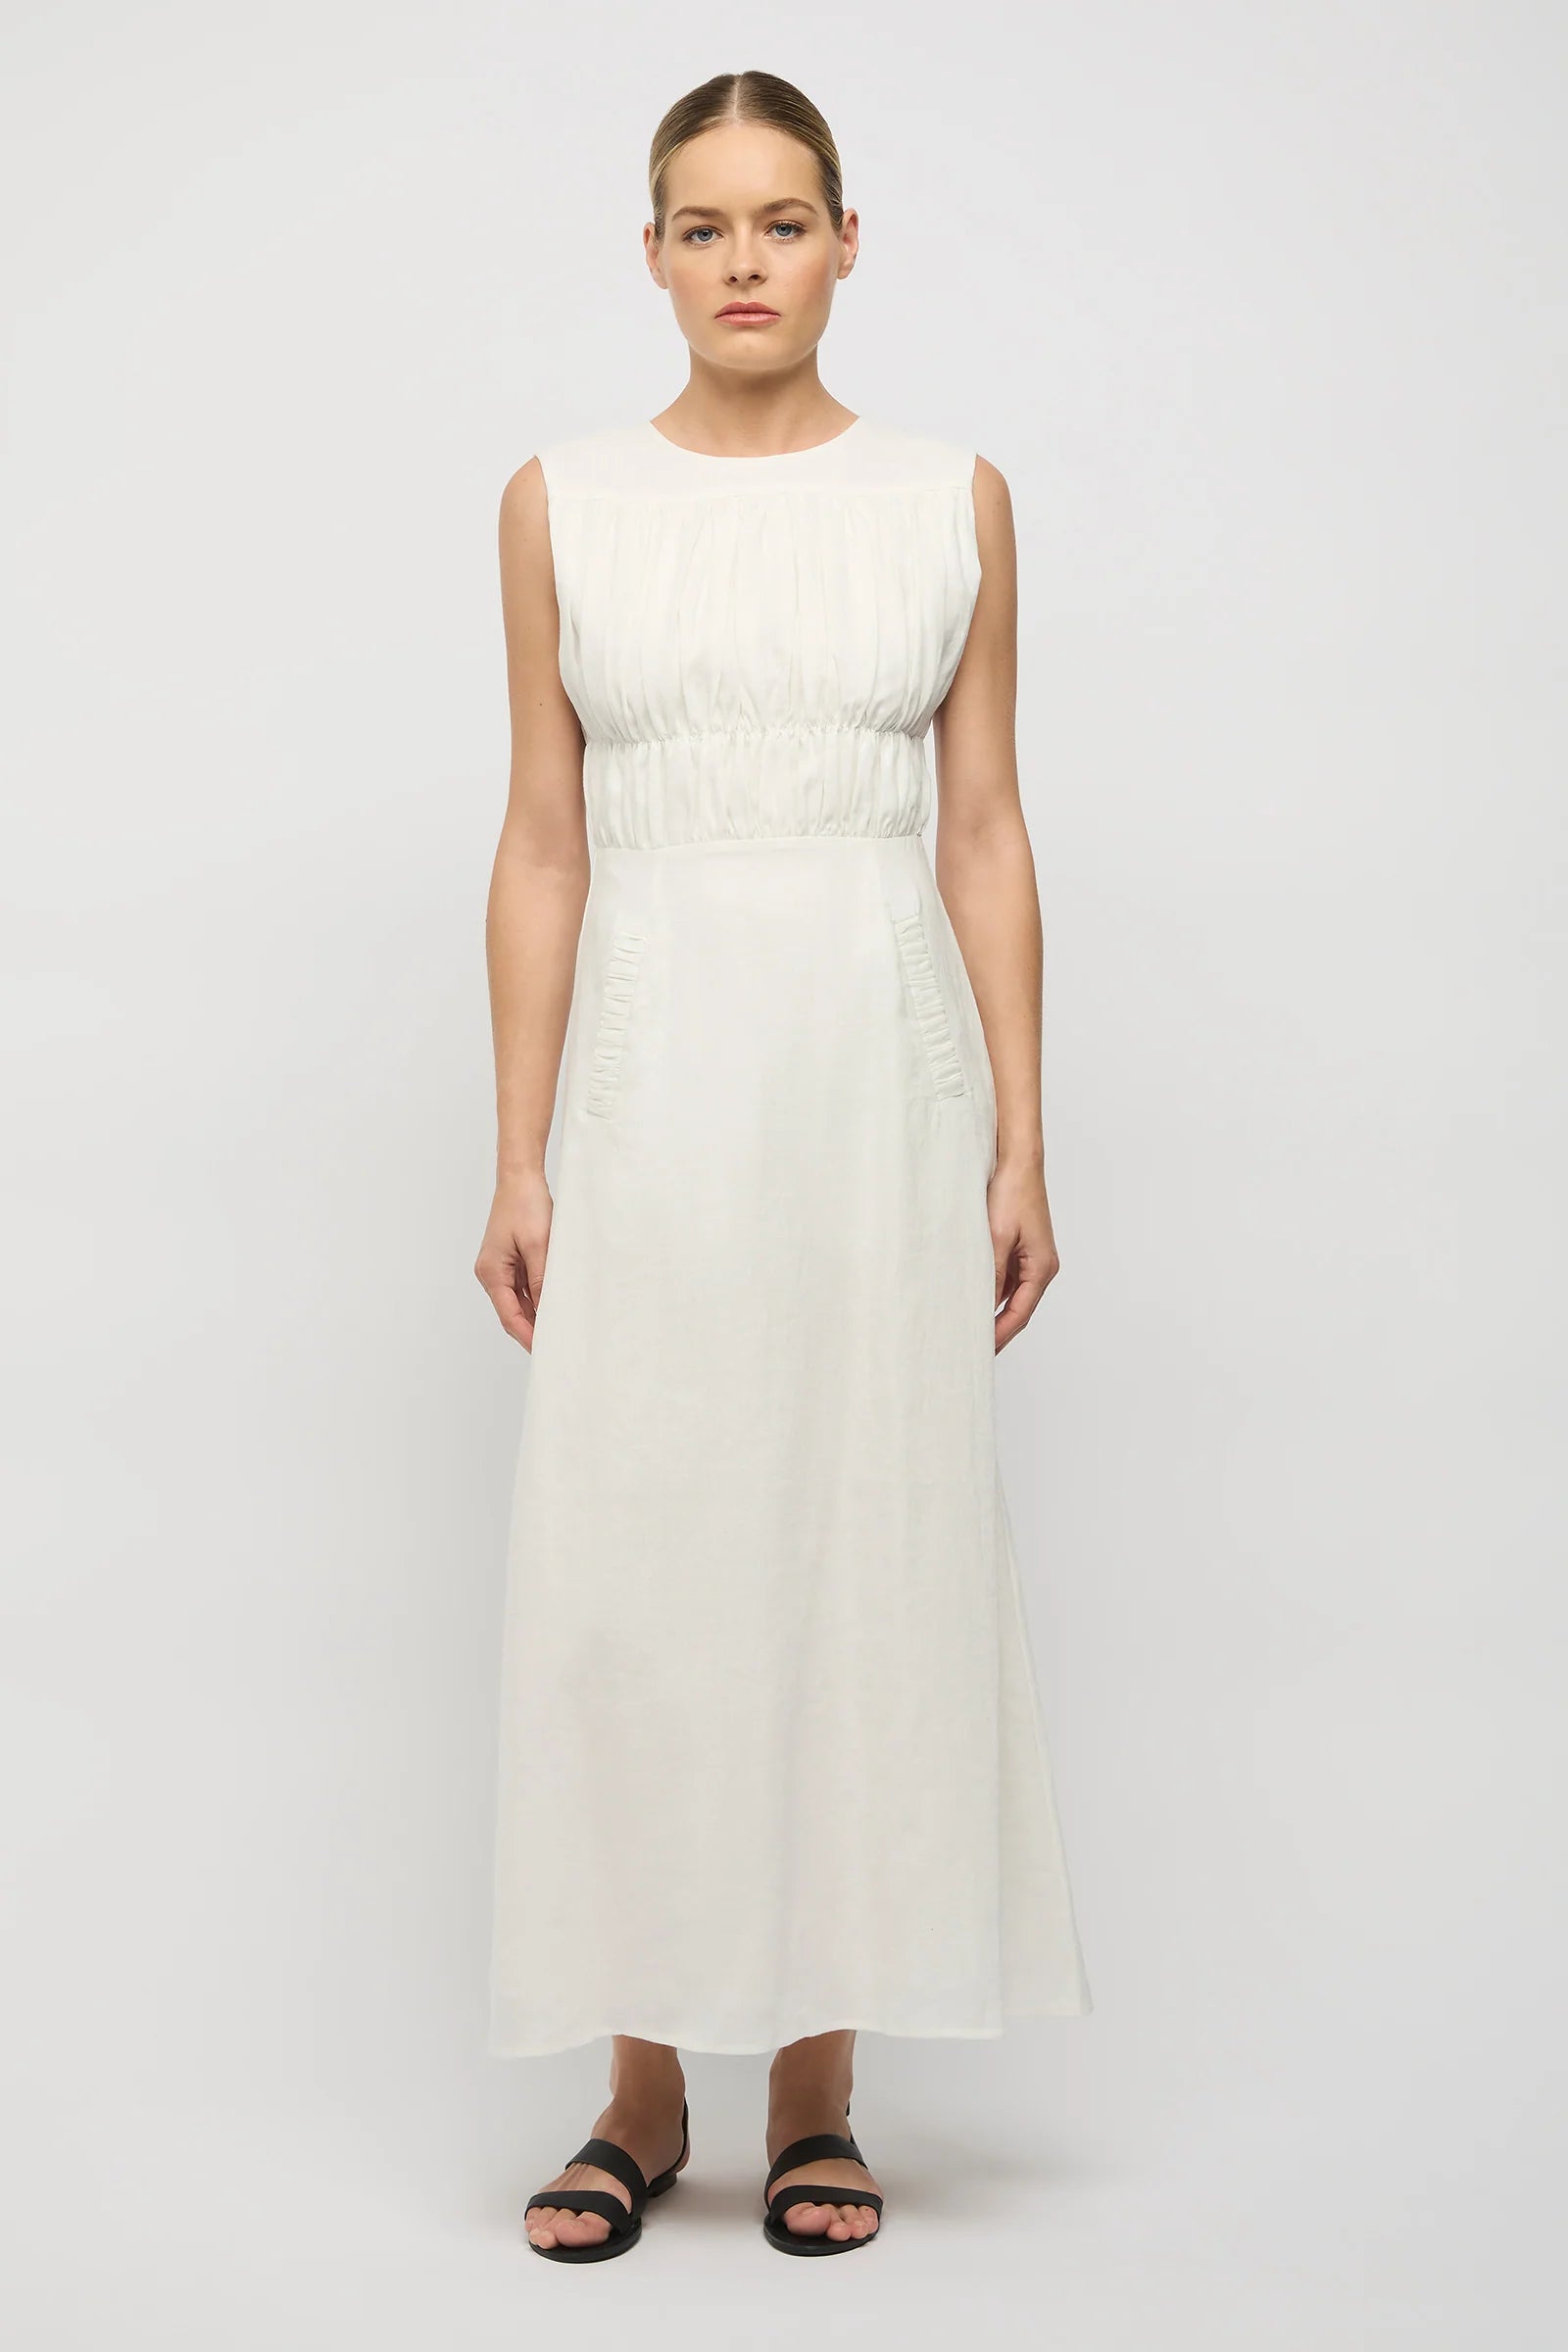 Lilibert Linen Dress in White